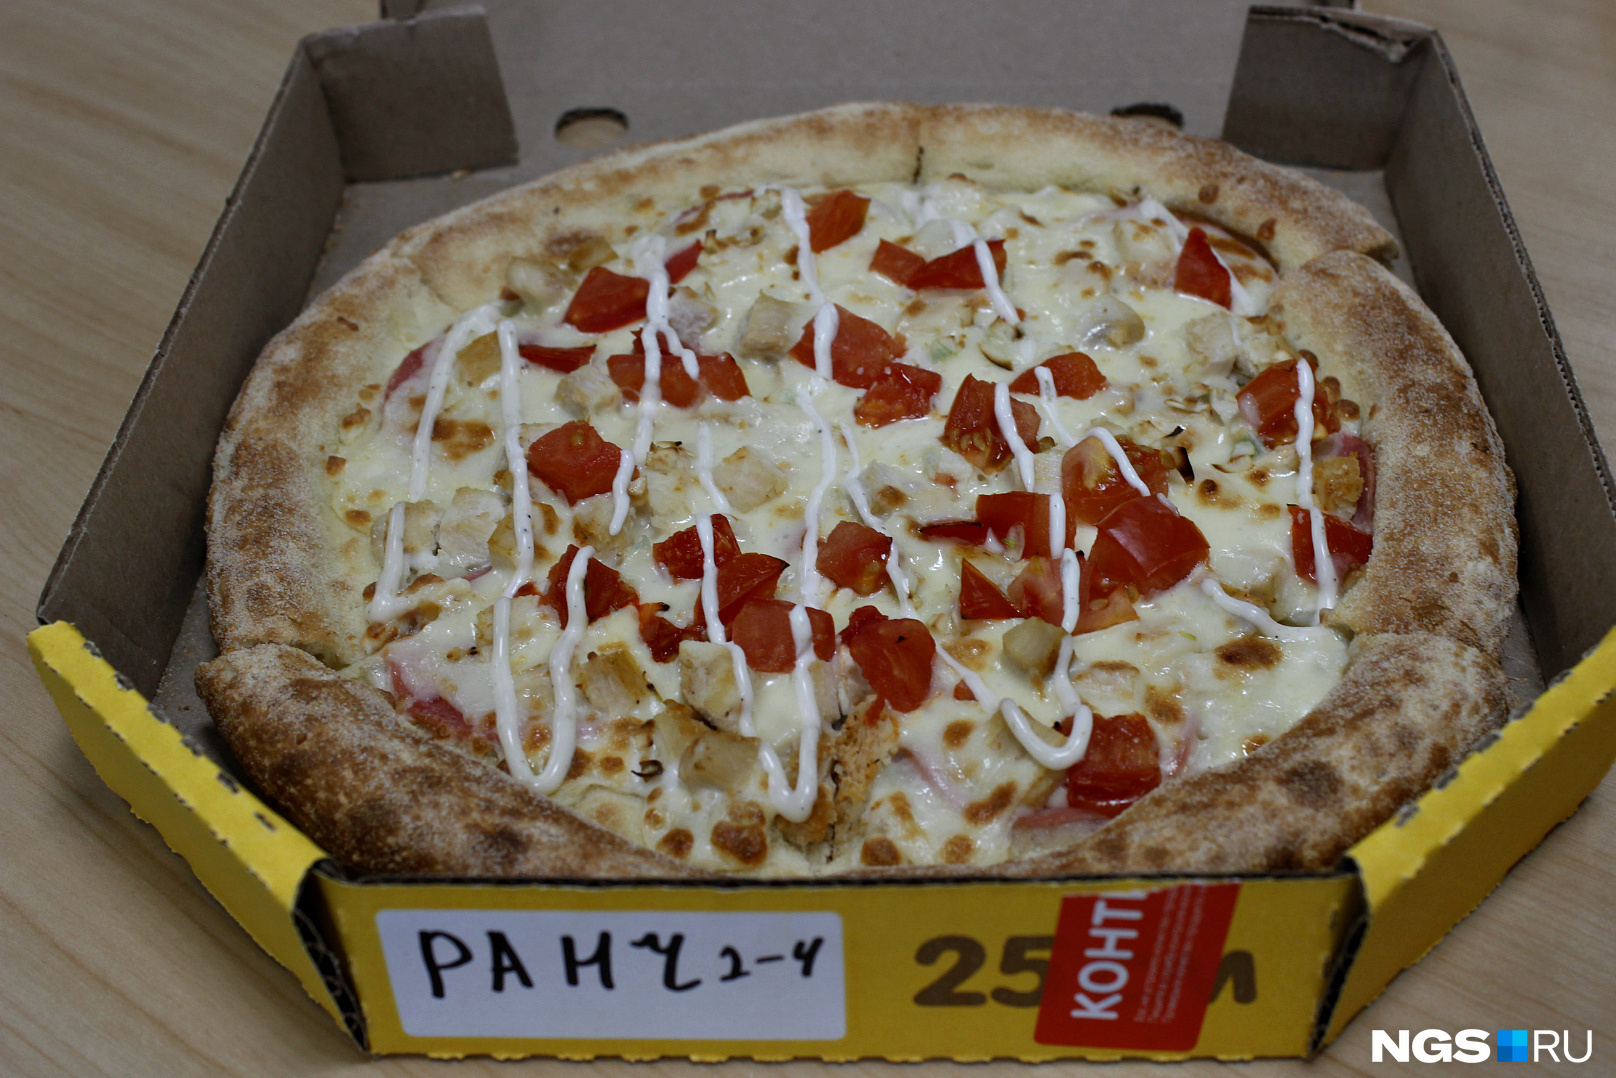 мясная пицца папа джонс состав фото 23